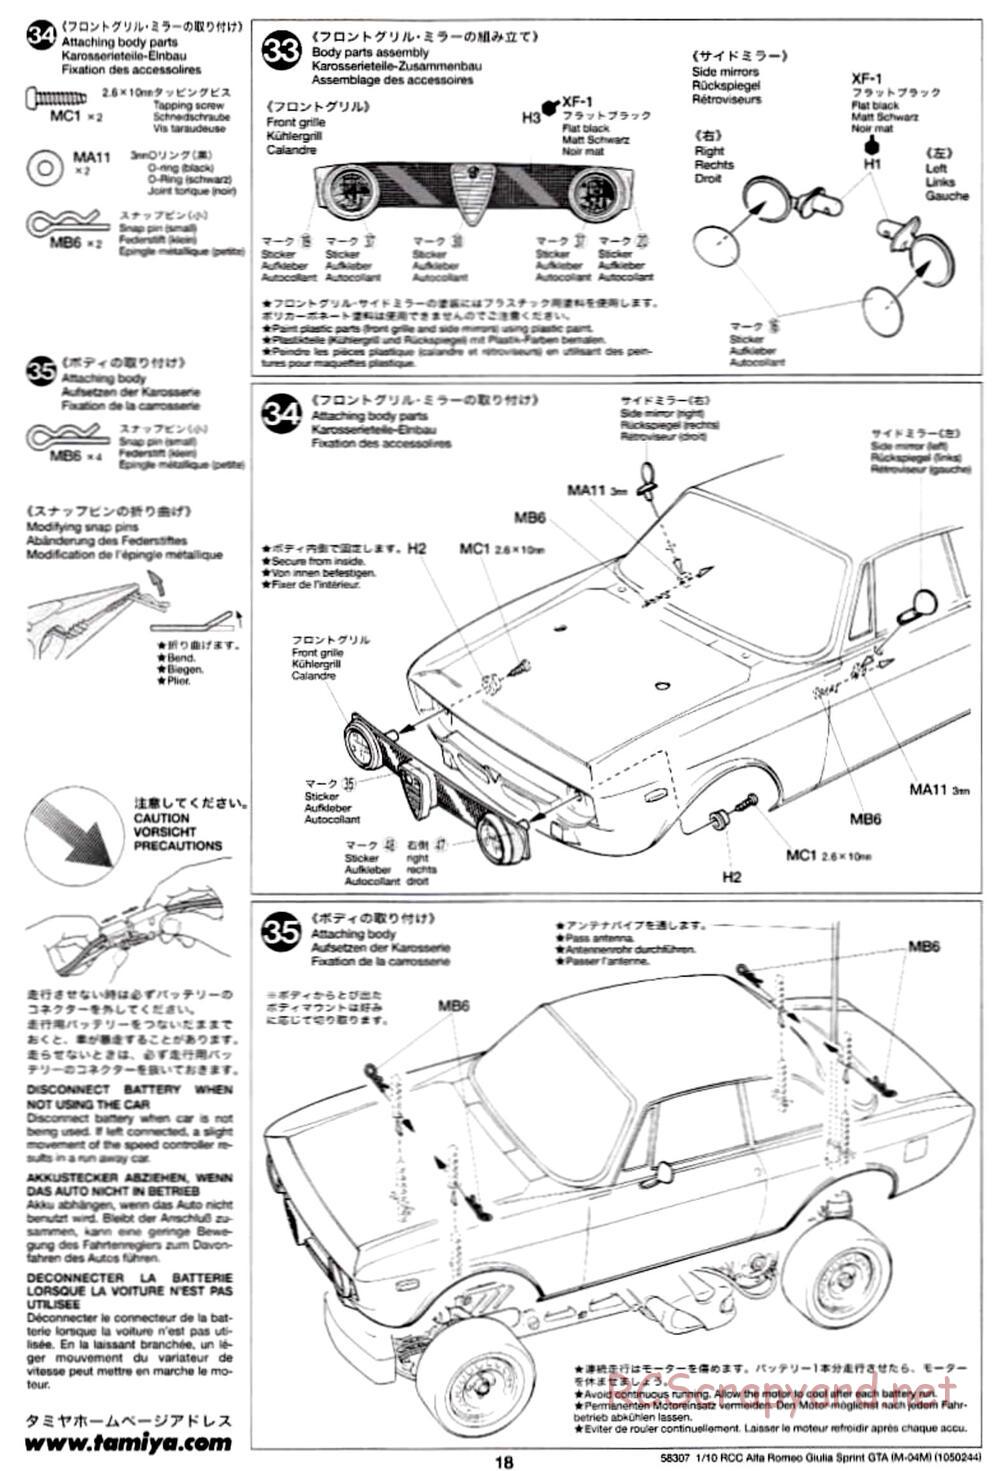 Tamiya - Alfa Romeo Giulia Sprint GTA - M04M Chassis - Manual - Page 18